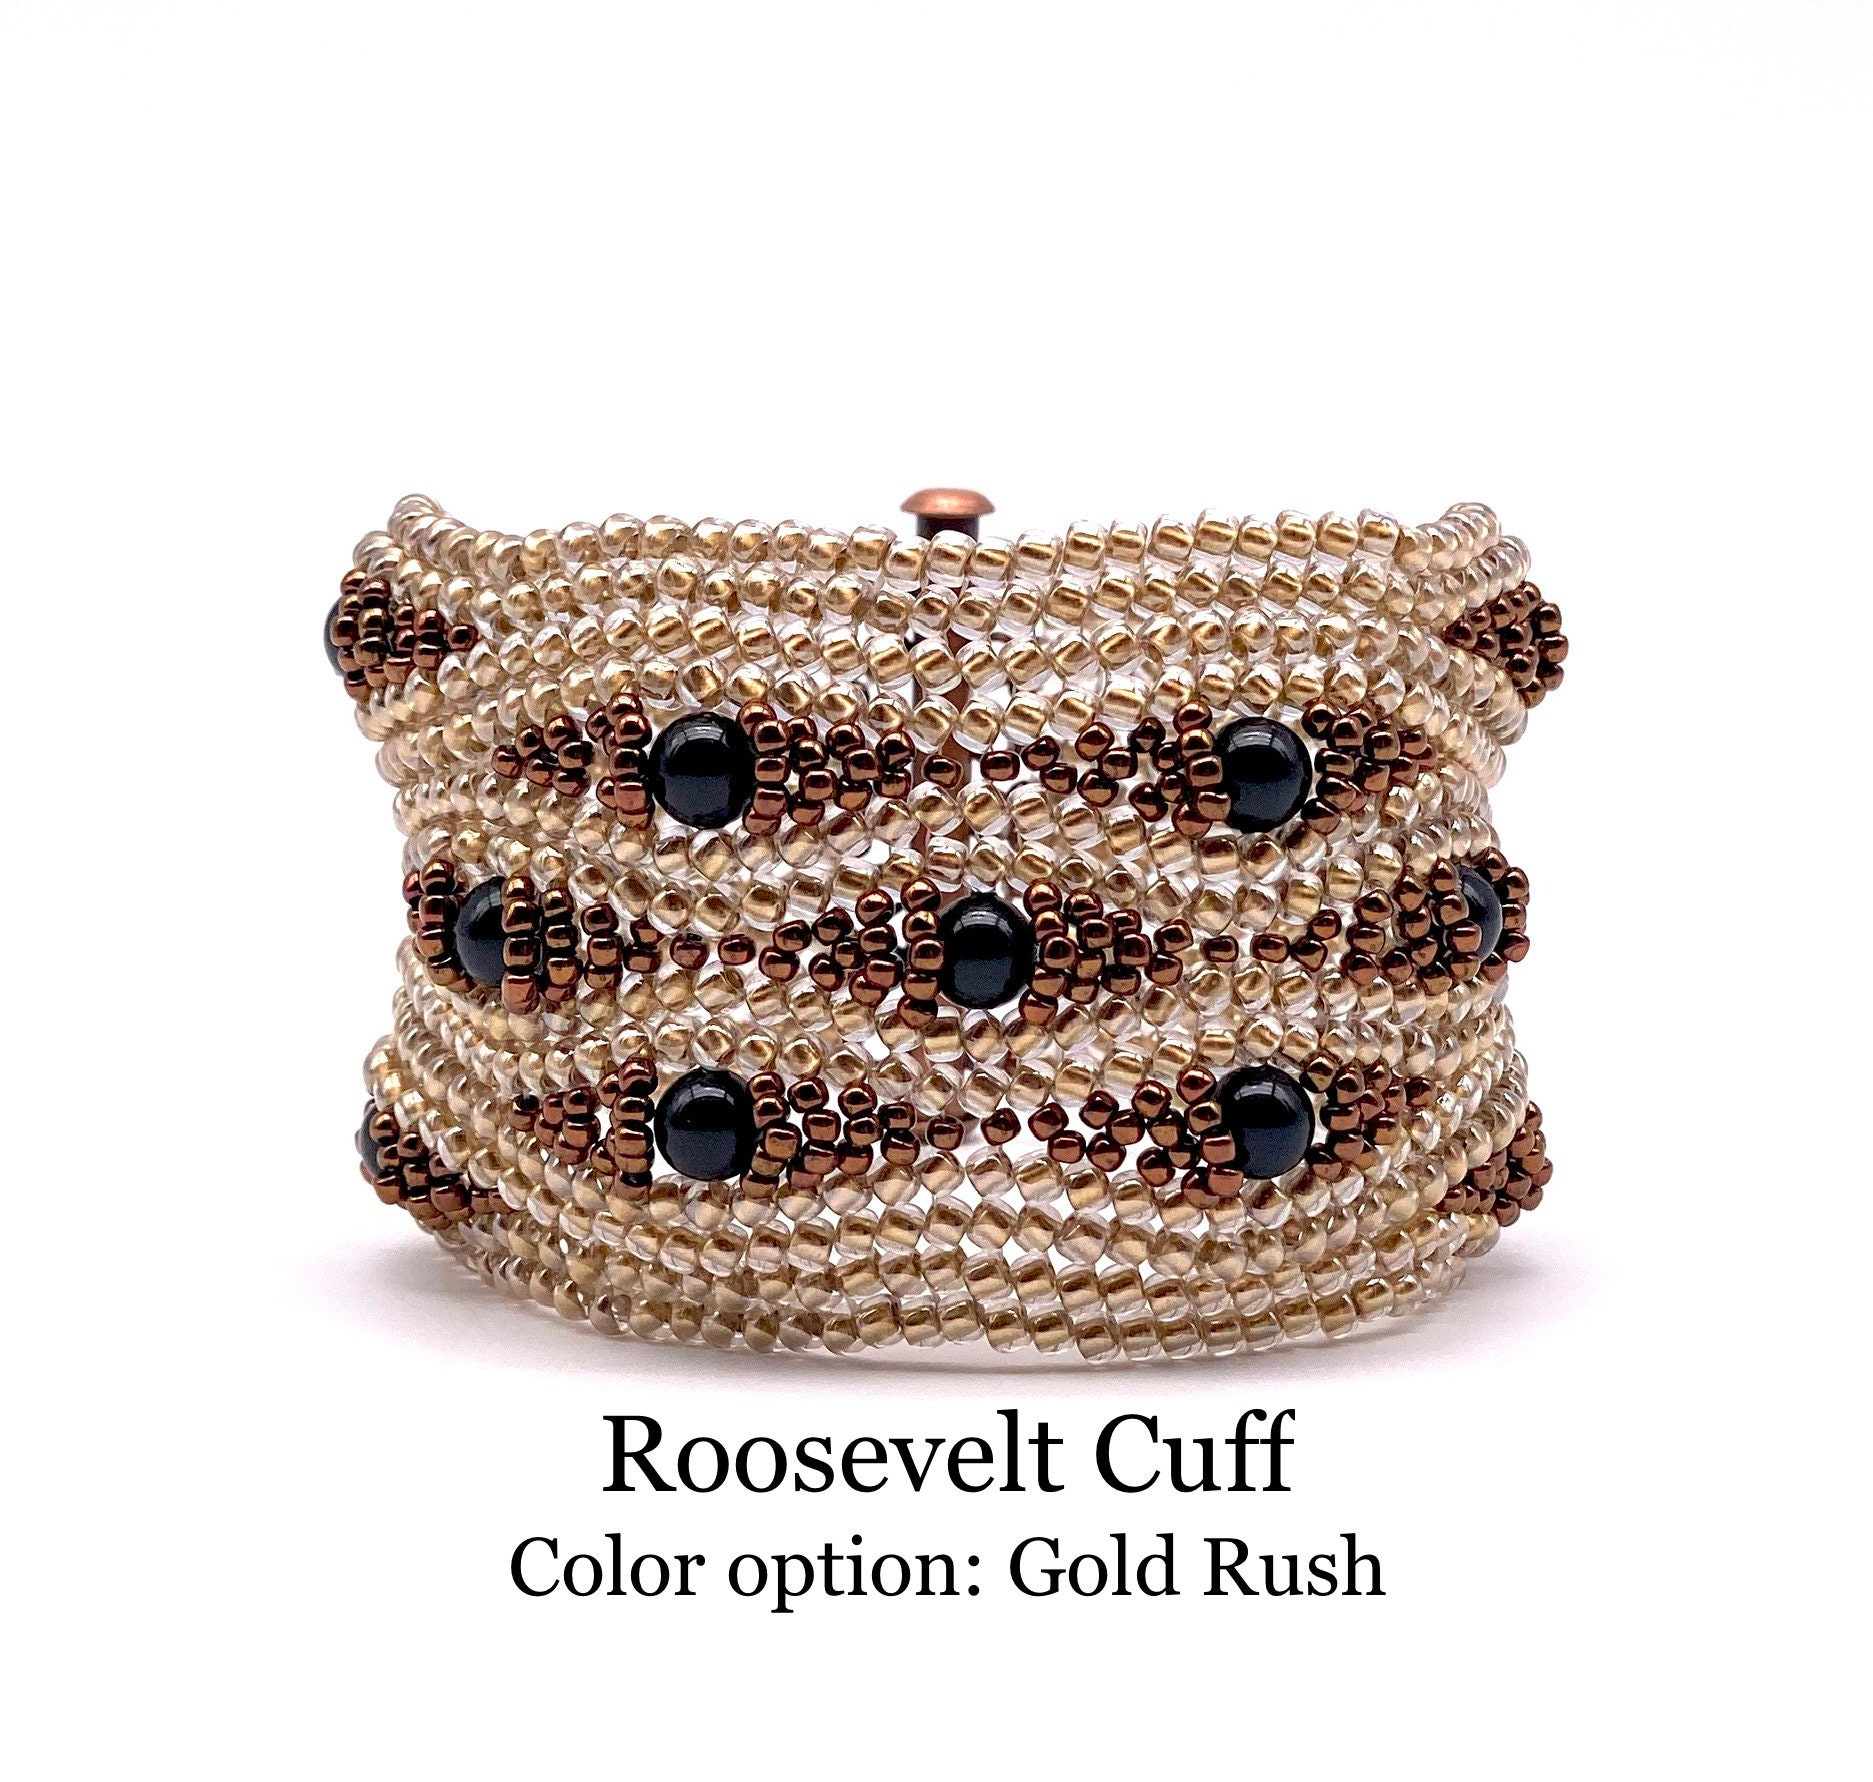 Peyote Stitch Bracelet Kit Cactusrosejewelry Colors of Love Bracelet Kit,  Beading Kit, Peyote Bracelet, 3-drop Peyote, Heart Bracelet 